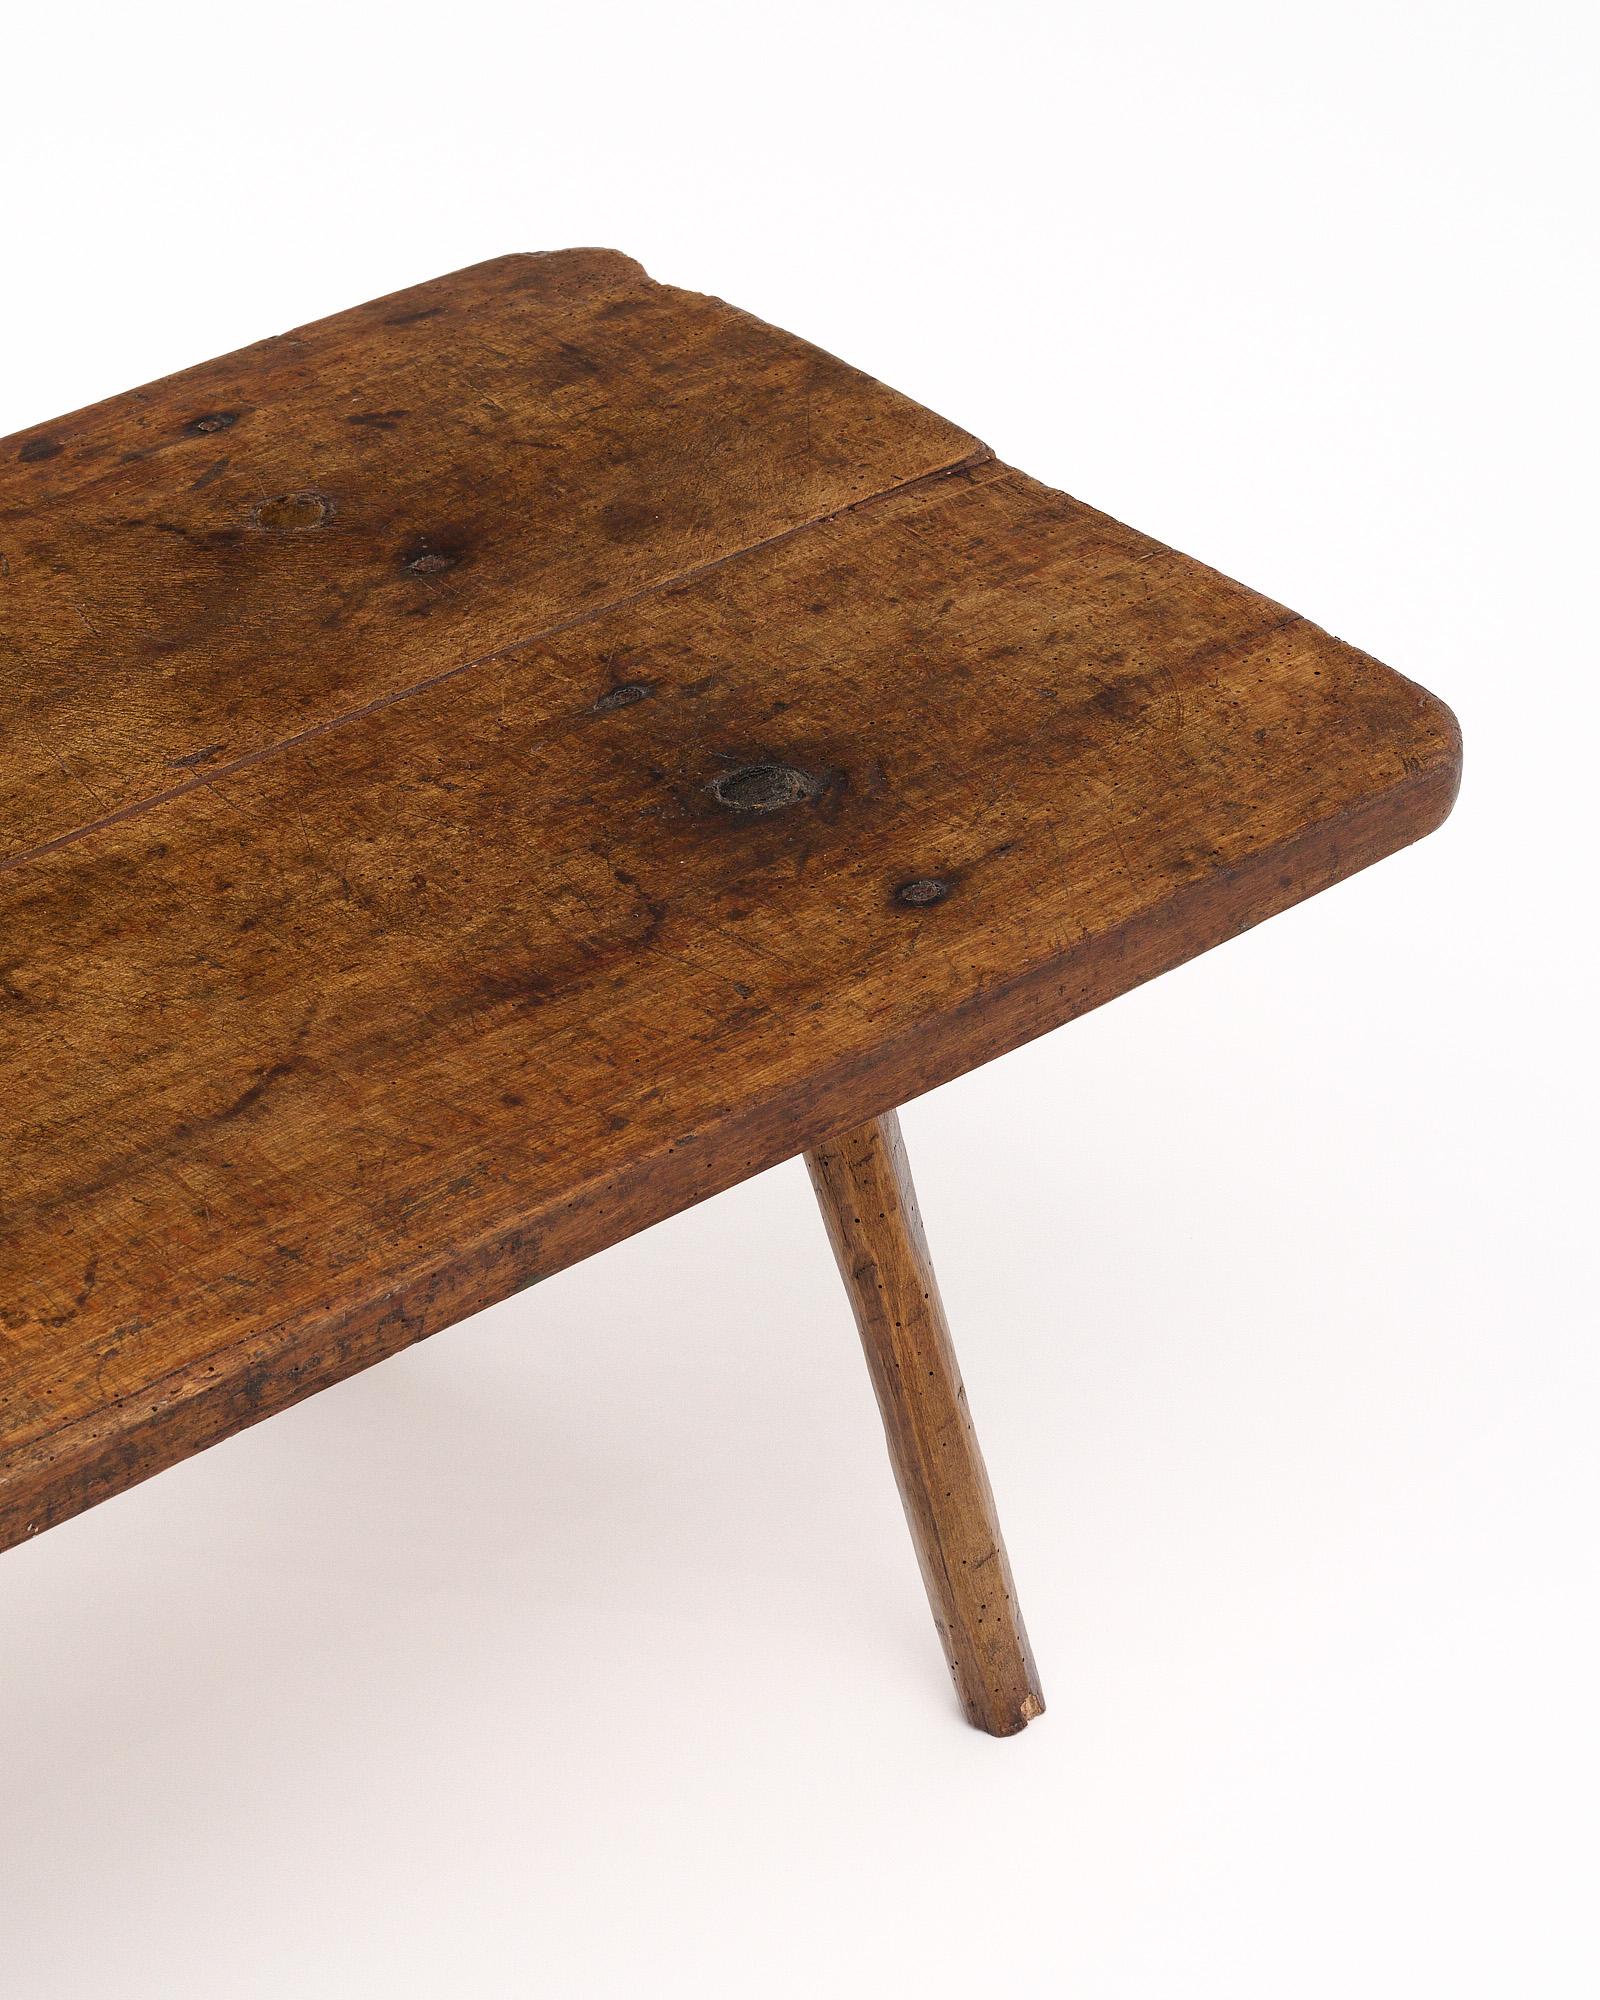 Wood Antique Italian Arte Povera “Shepherd” Table For Sale